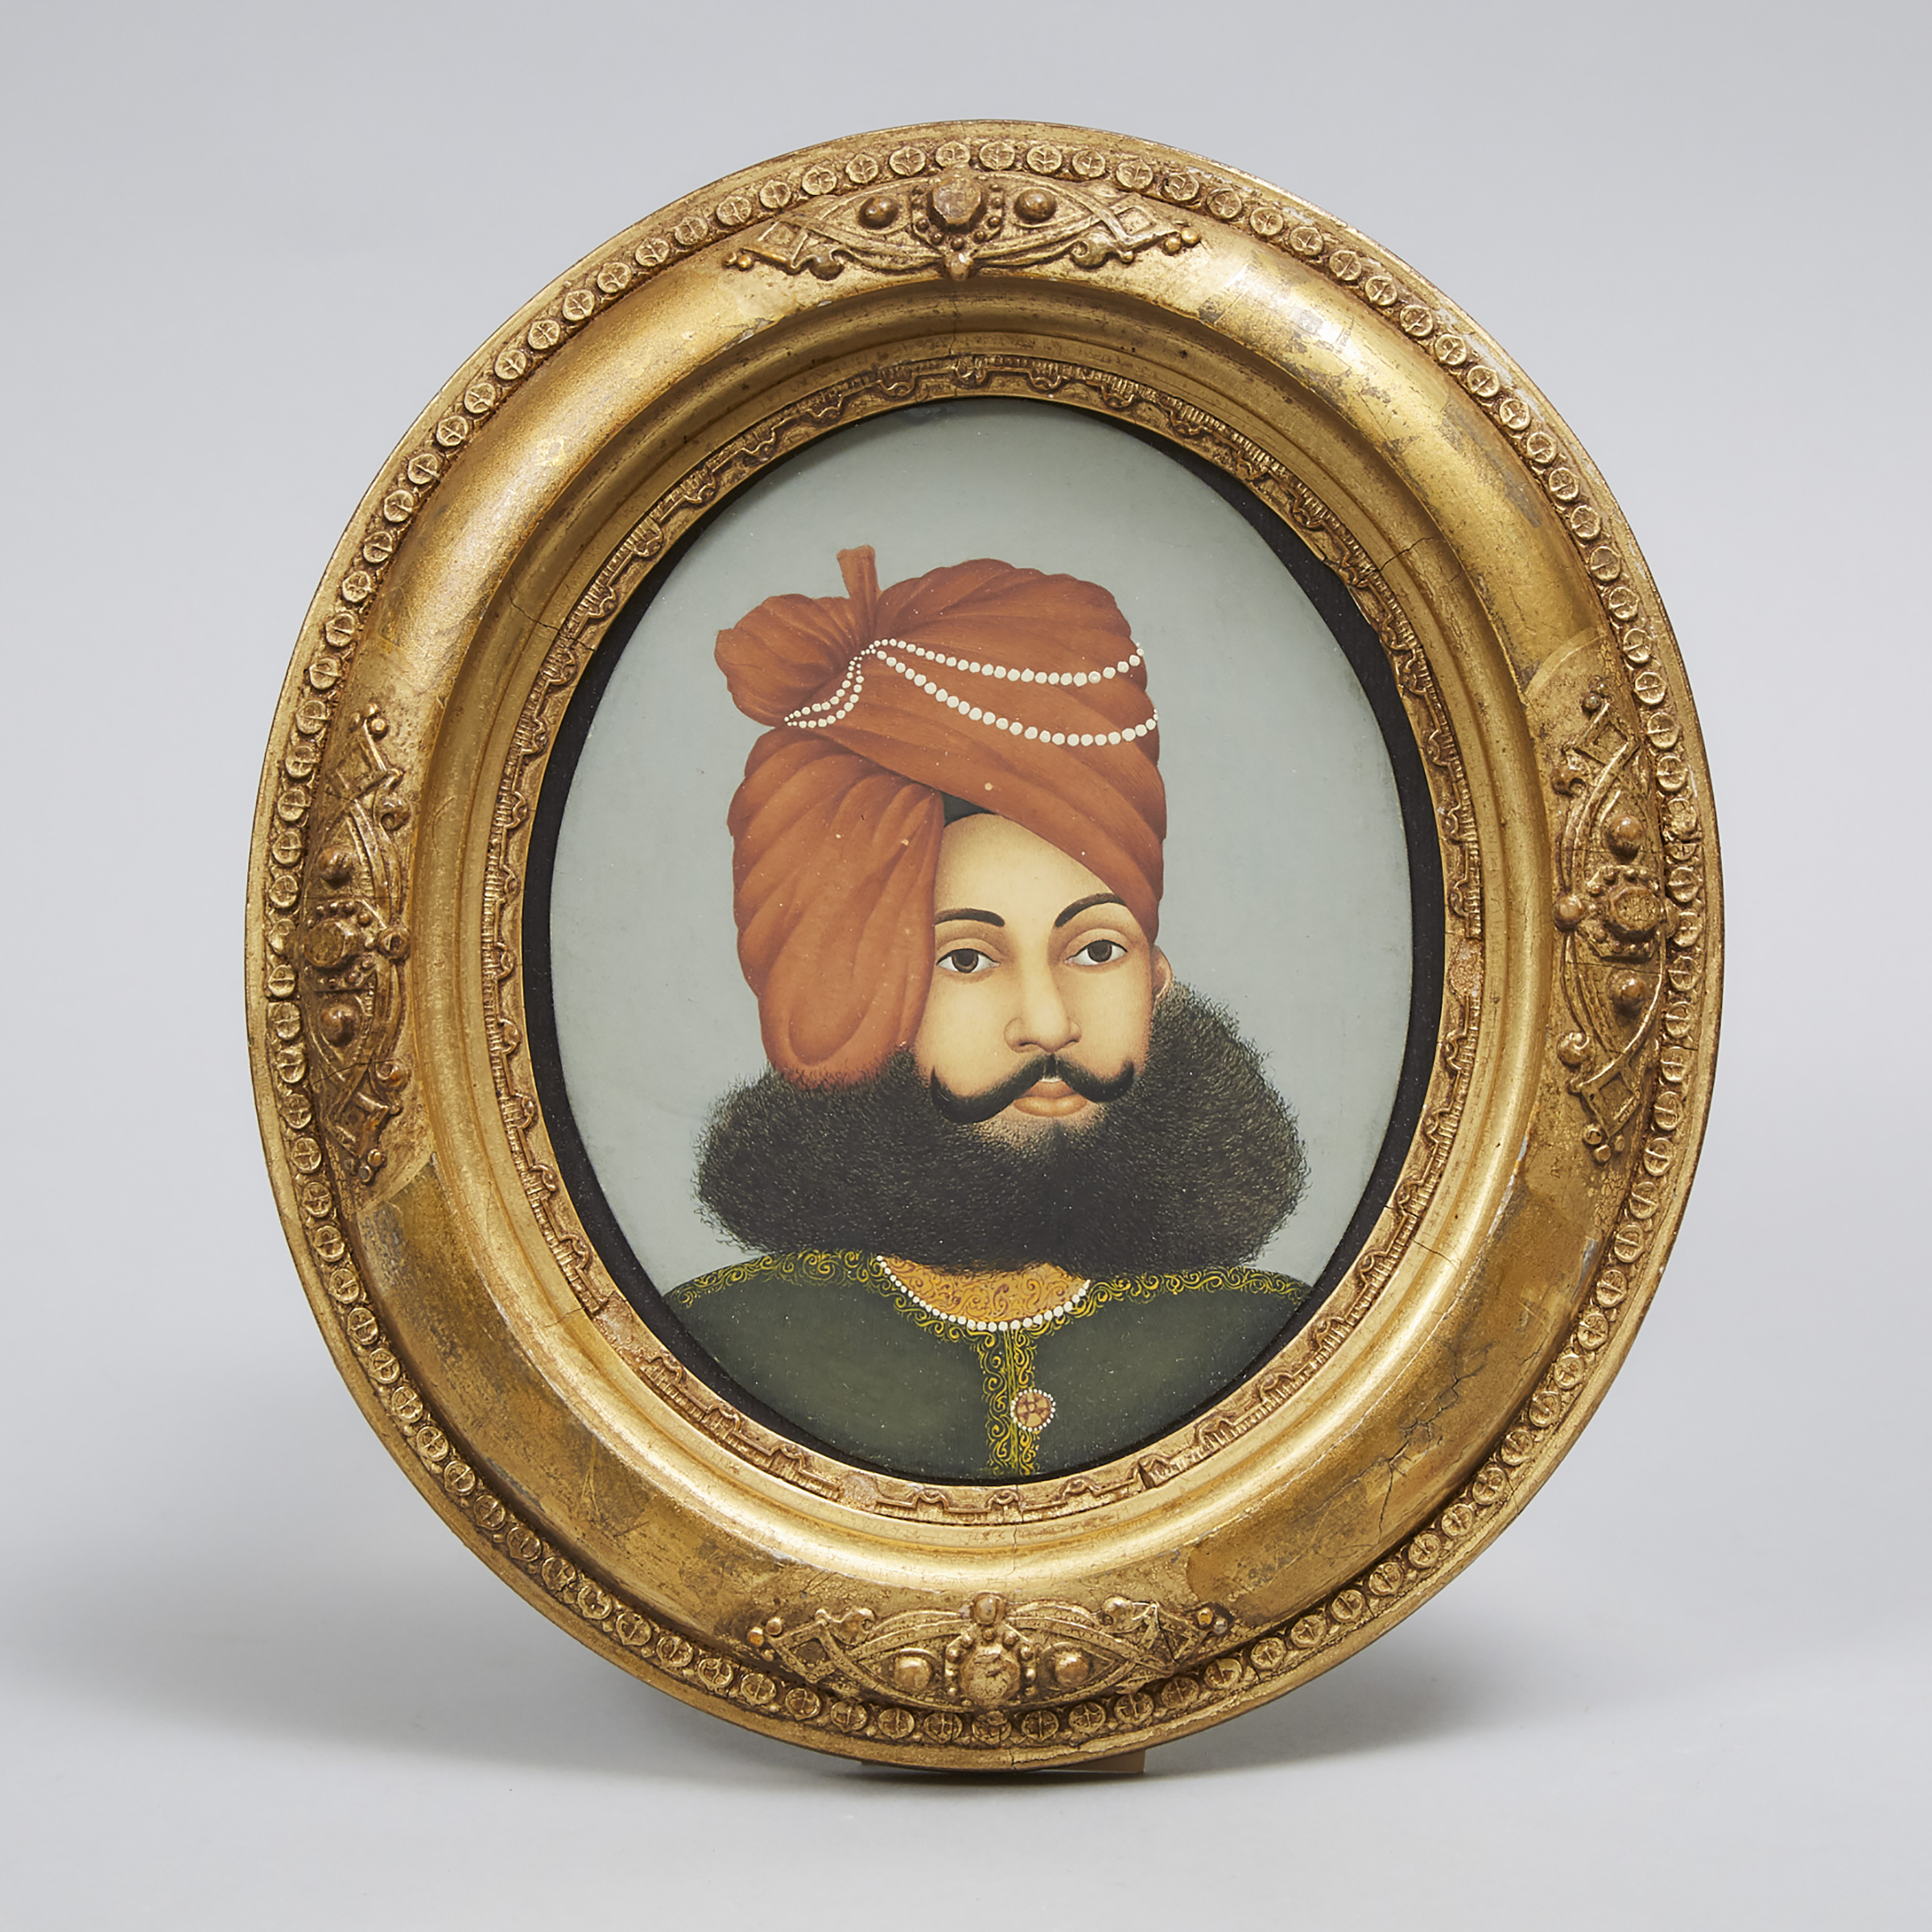 Portrait Miniature of a Persian Aristocratic Gentleman, mid 19th century